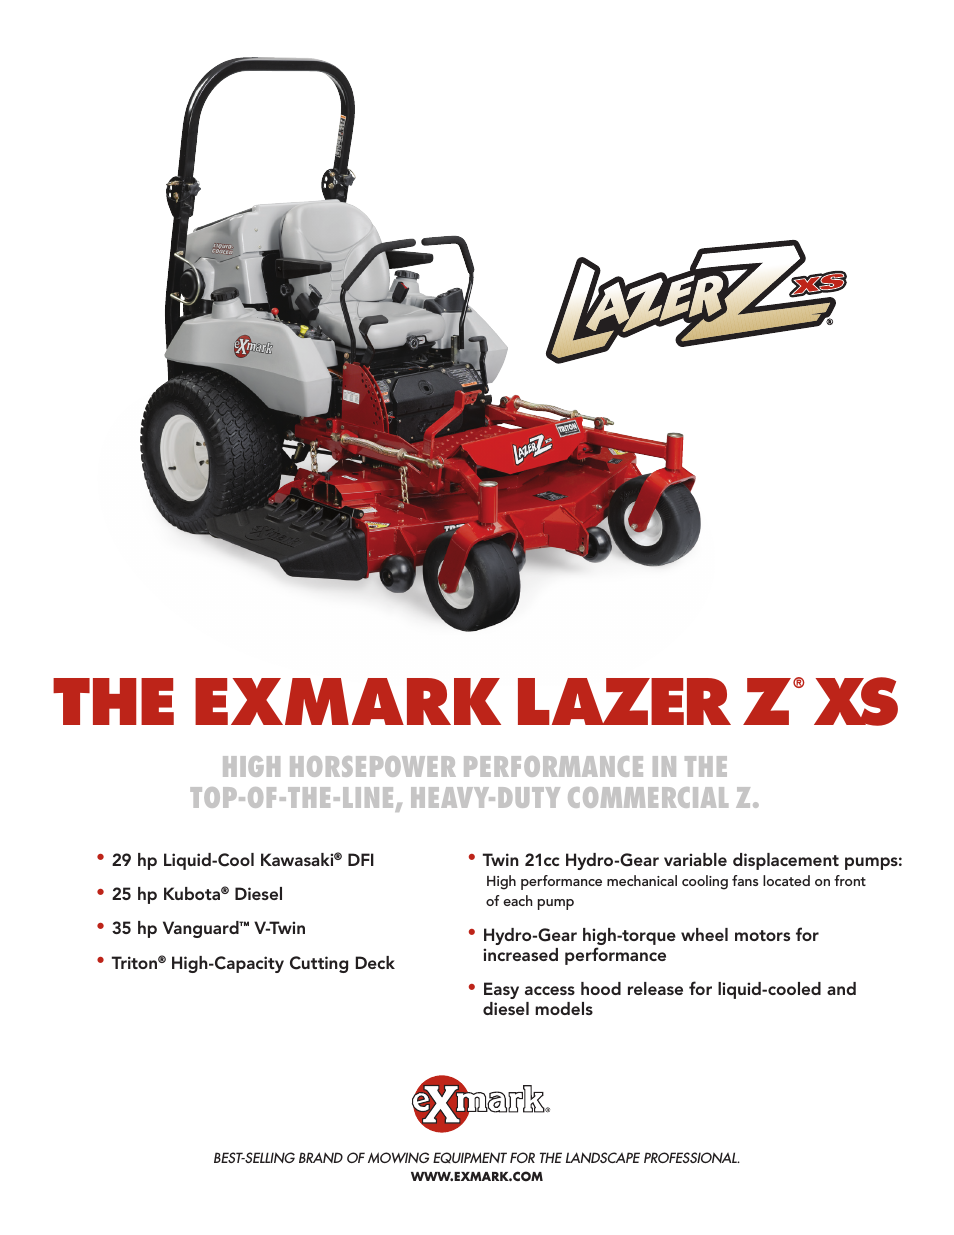 Lazer Z XS lXs29lKa605